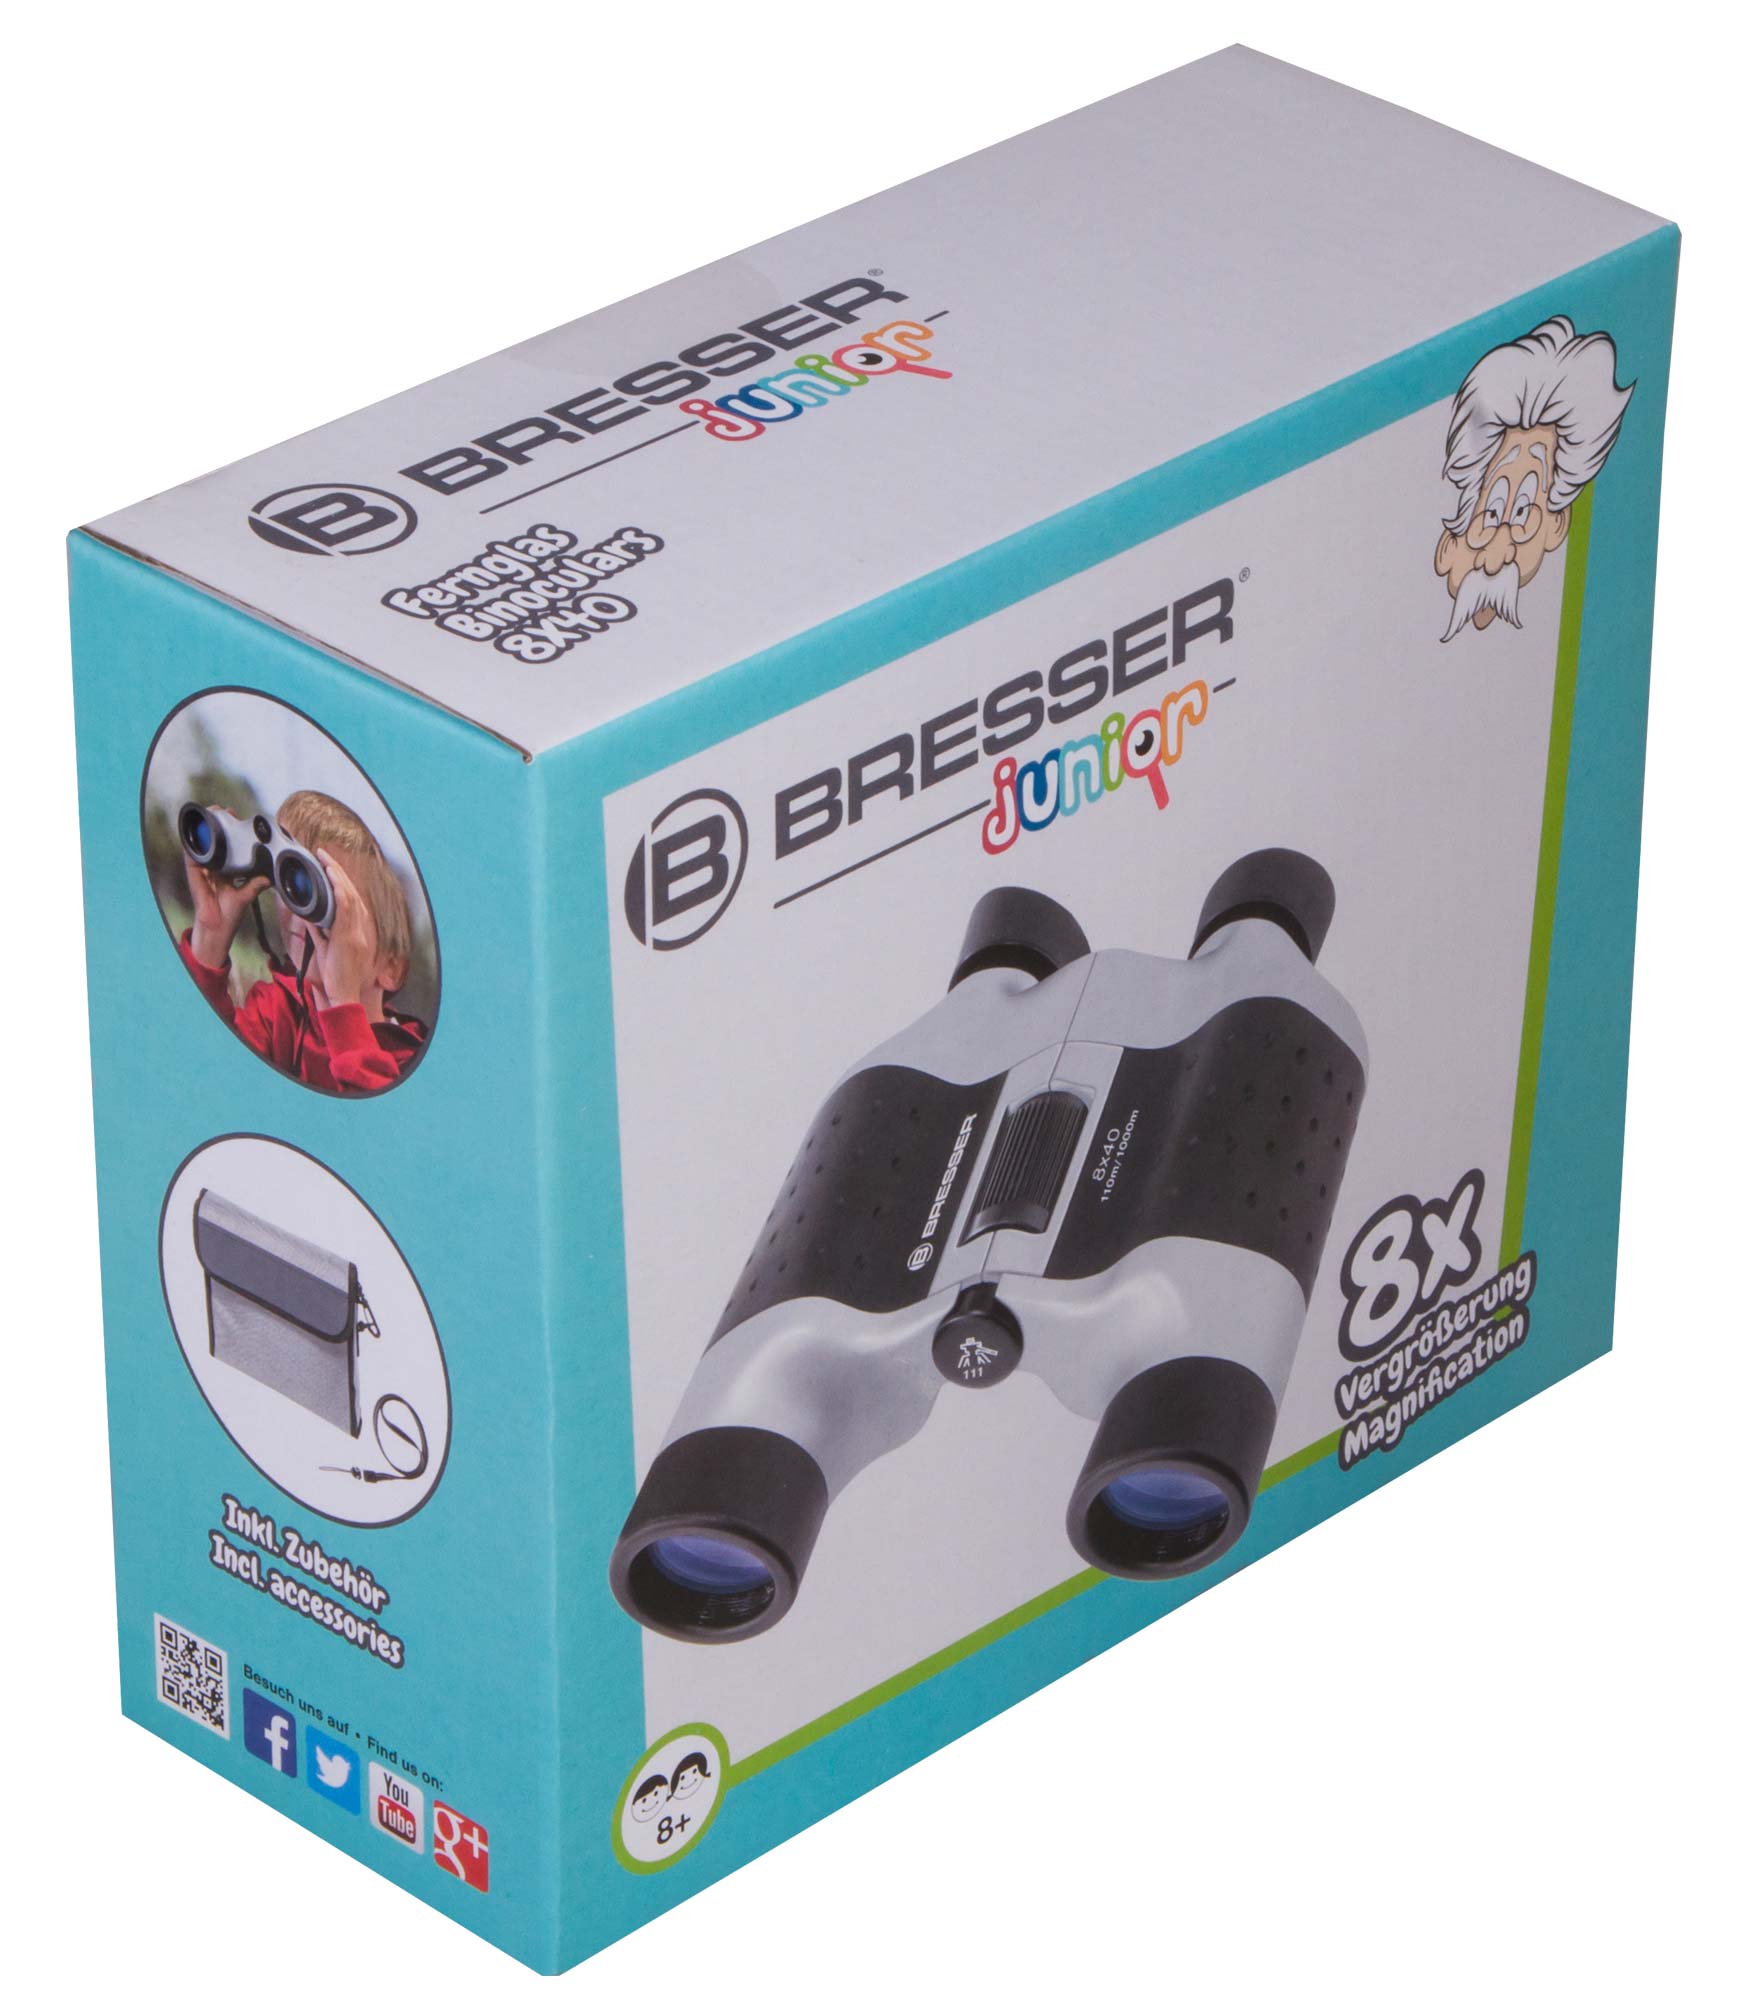 Bresser Junior 8x40 Binoculars for children